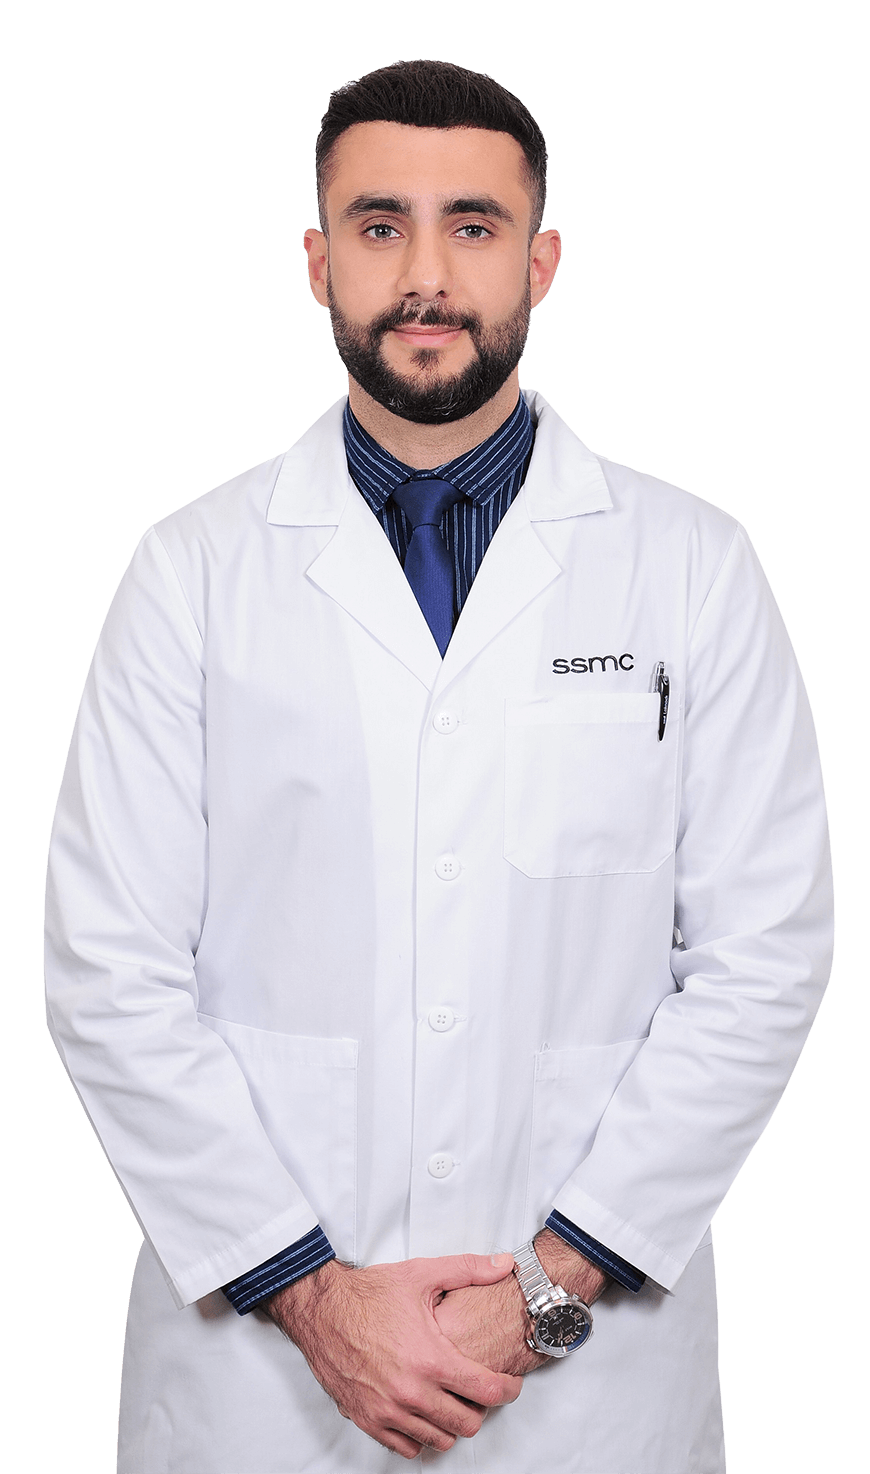 Dr. Sherif Hussein